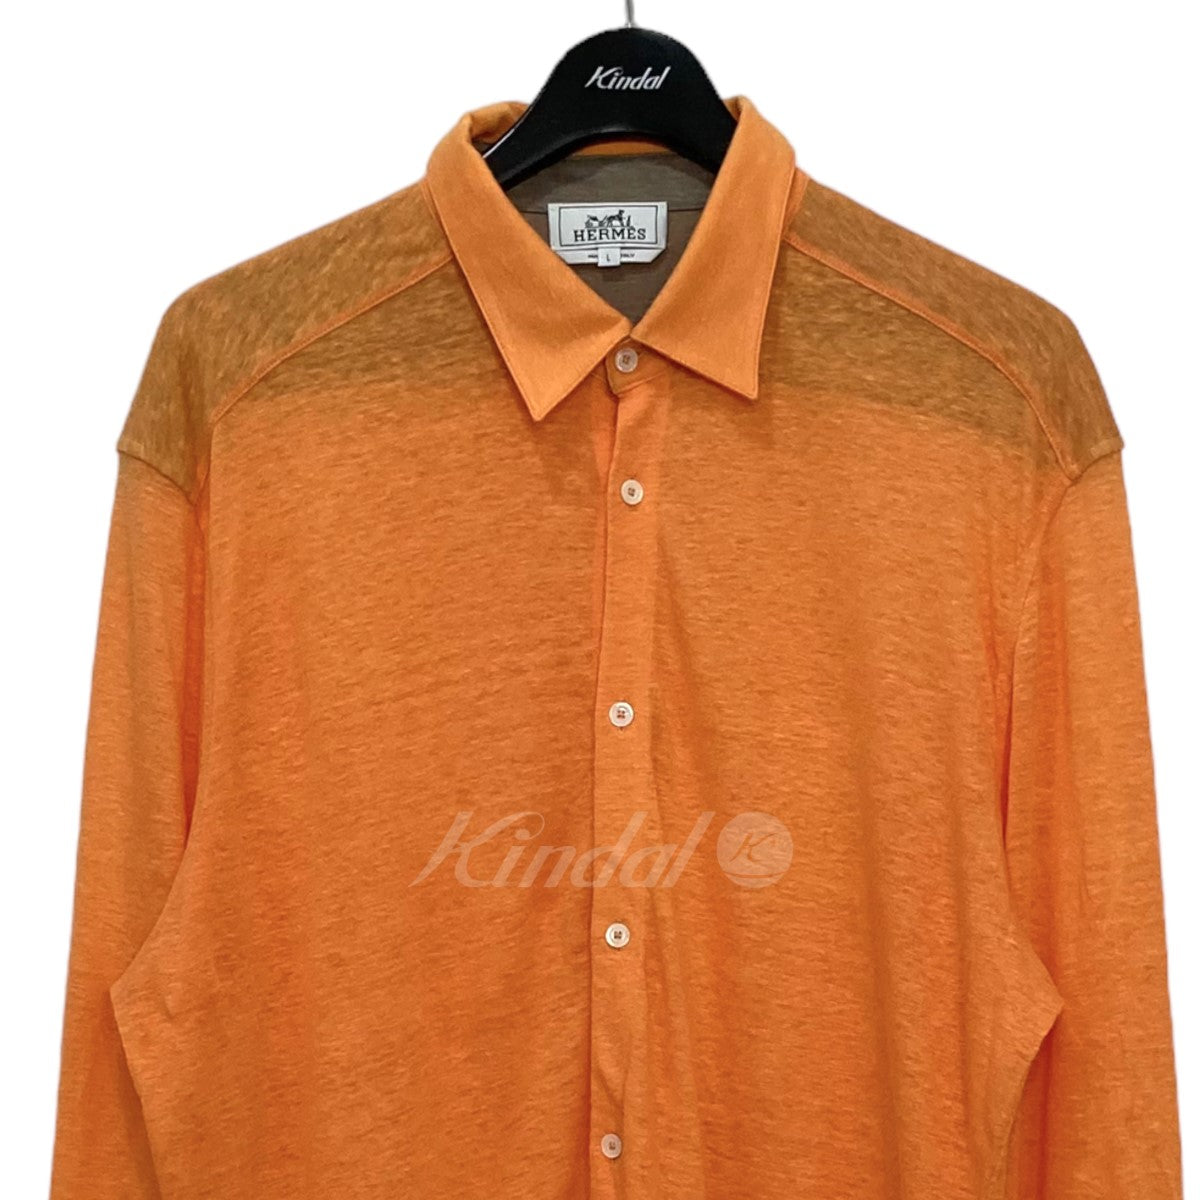 HERMES(エルメス) セリエボタン リネンシャツ オレンジ サイズ L 